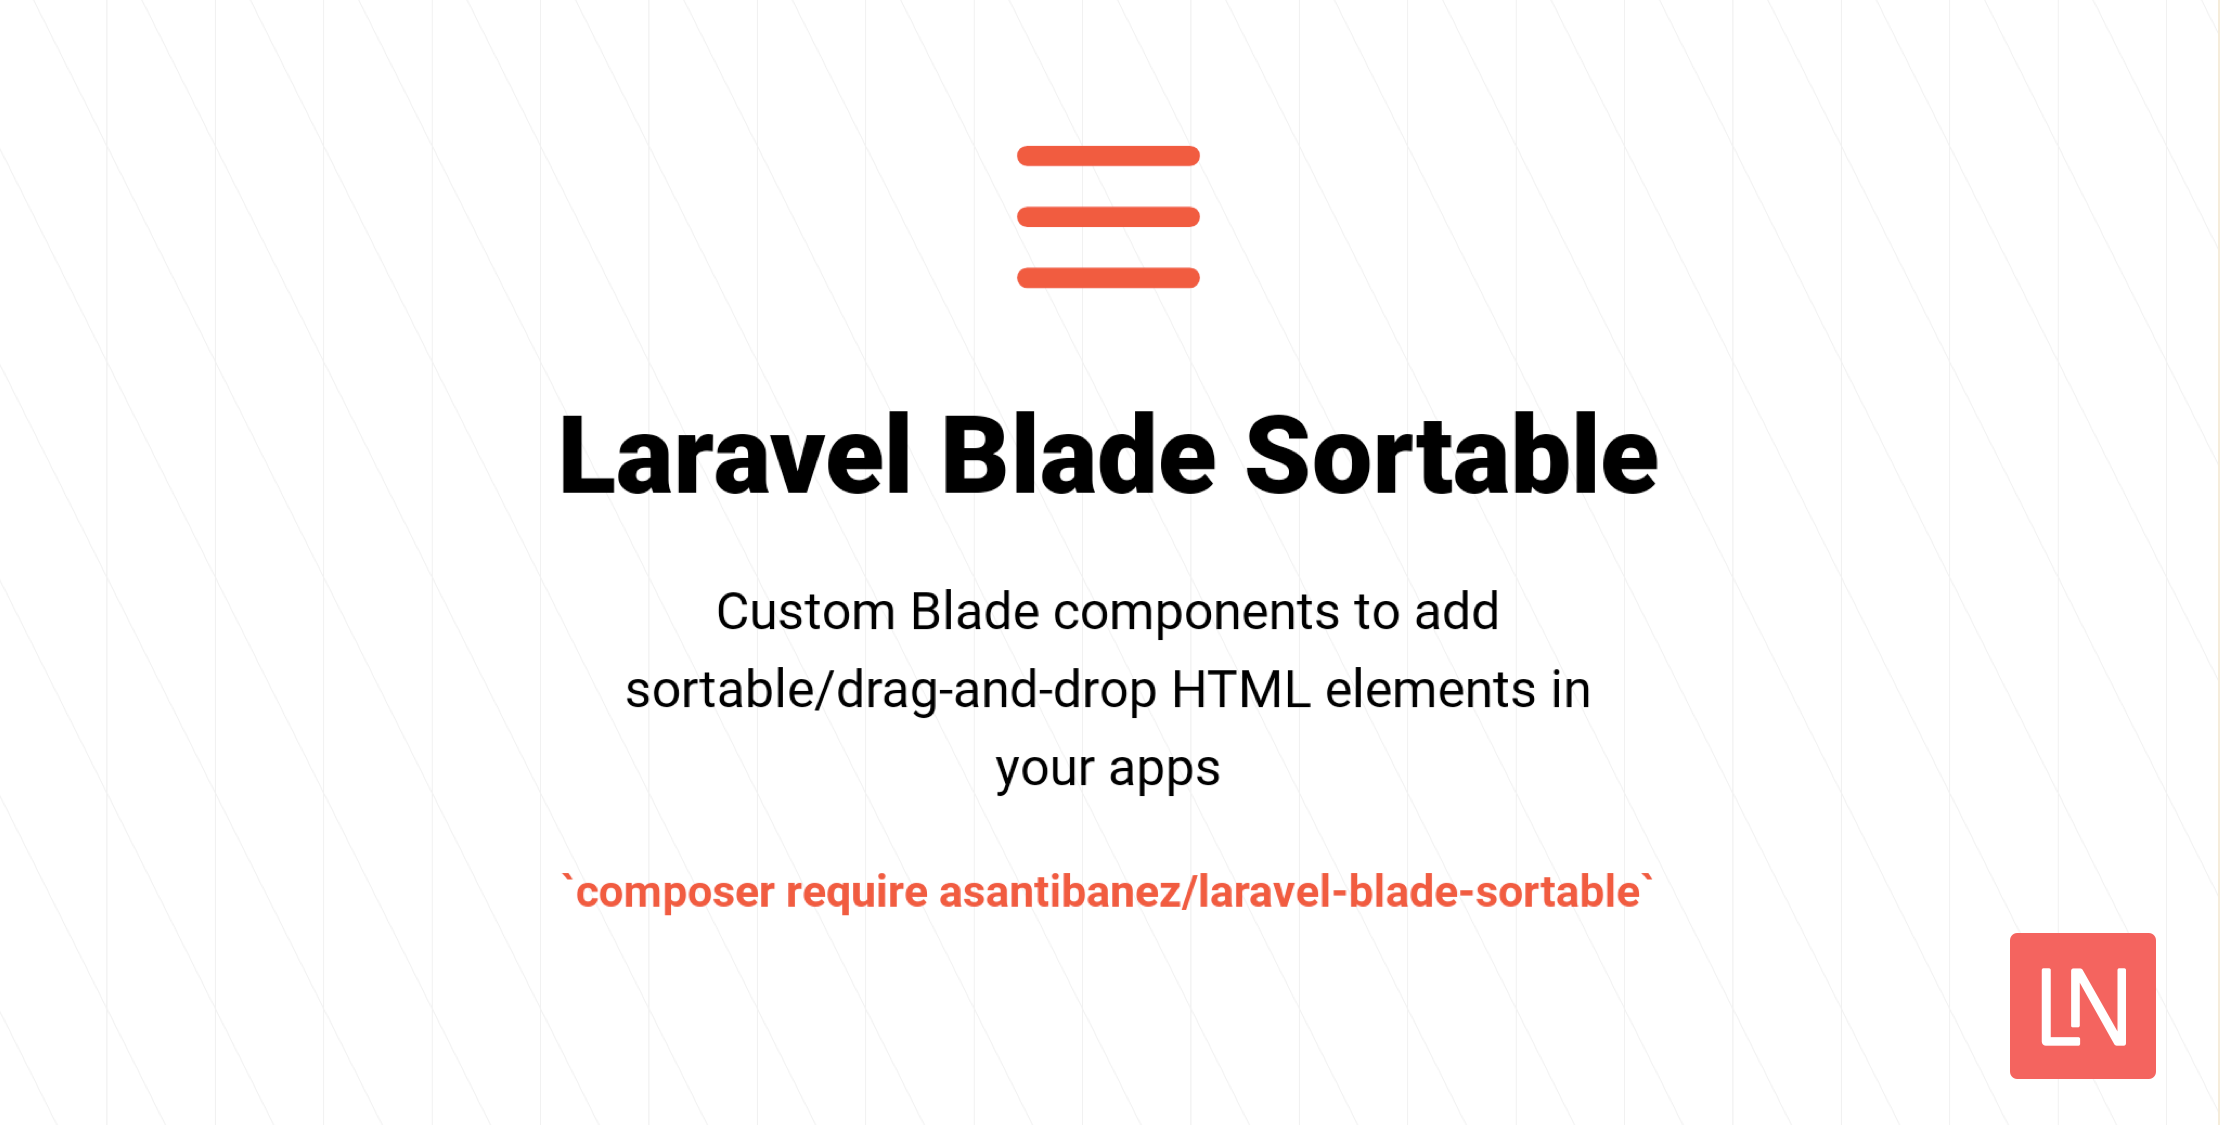 Laravel Blade Sortable image